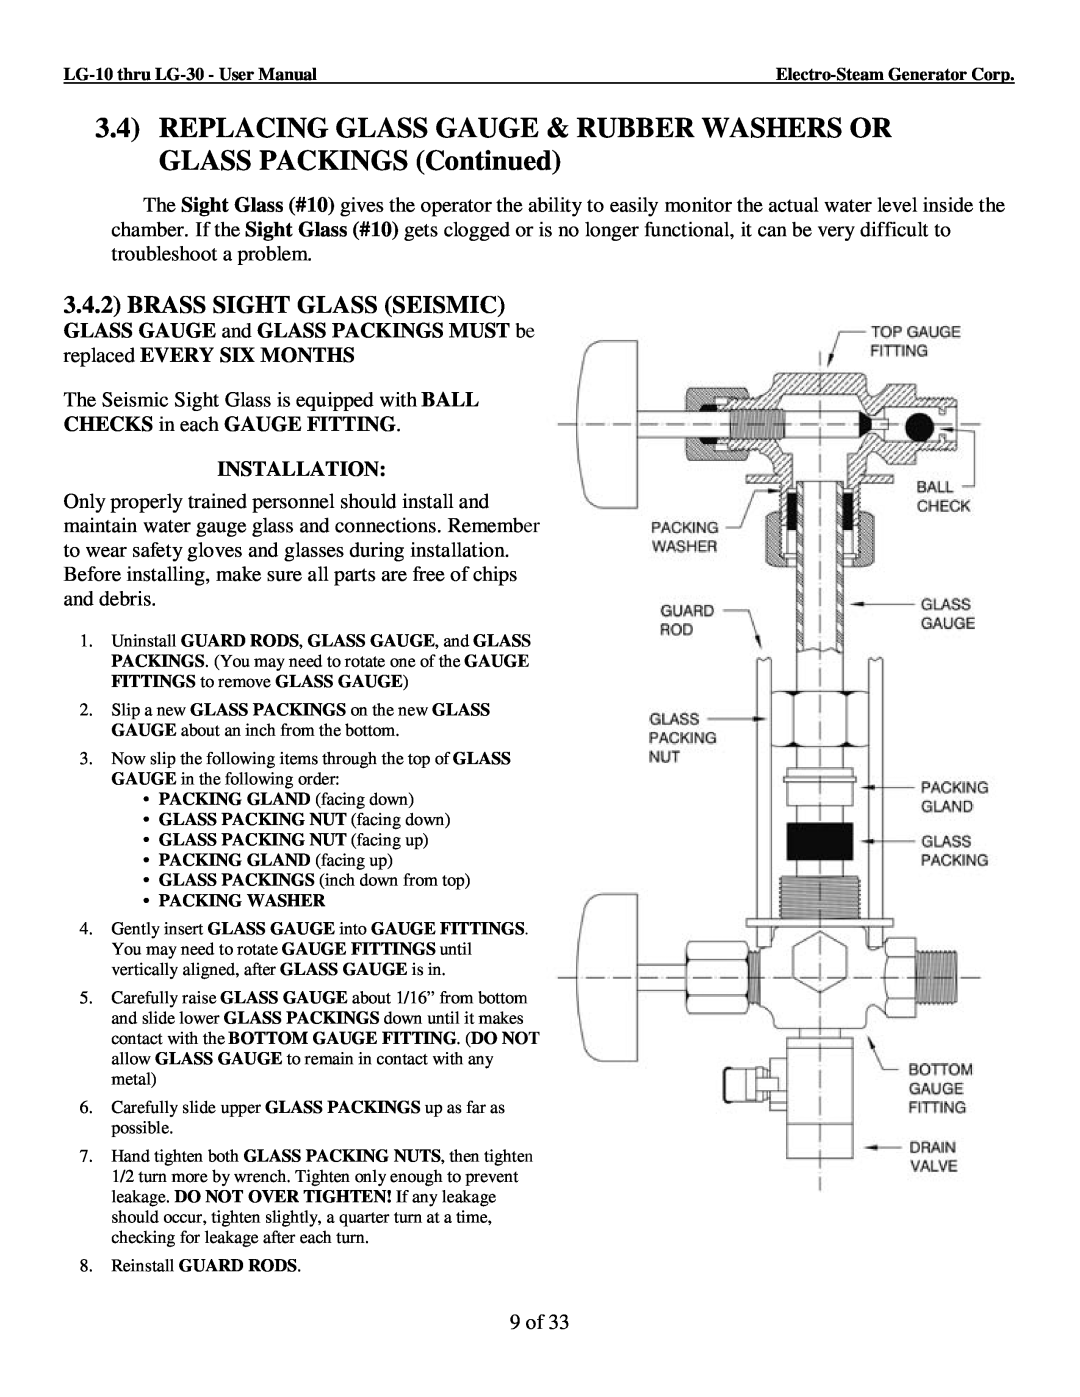 LG Electronics Brass Sight Glass Seismic, LG-10 thru LG-30 - User Manual, Electro-Steam Generator Corp, Packing Washer 